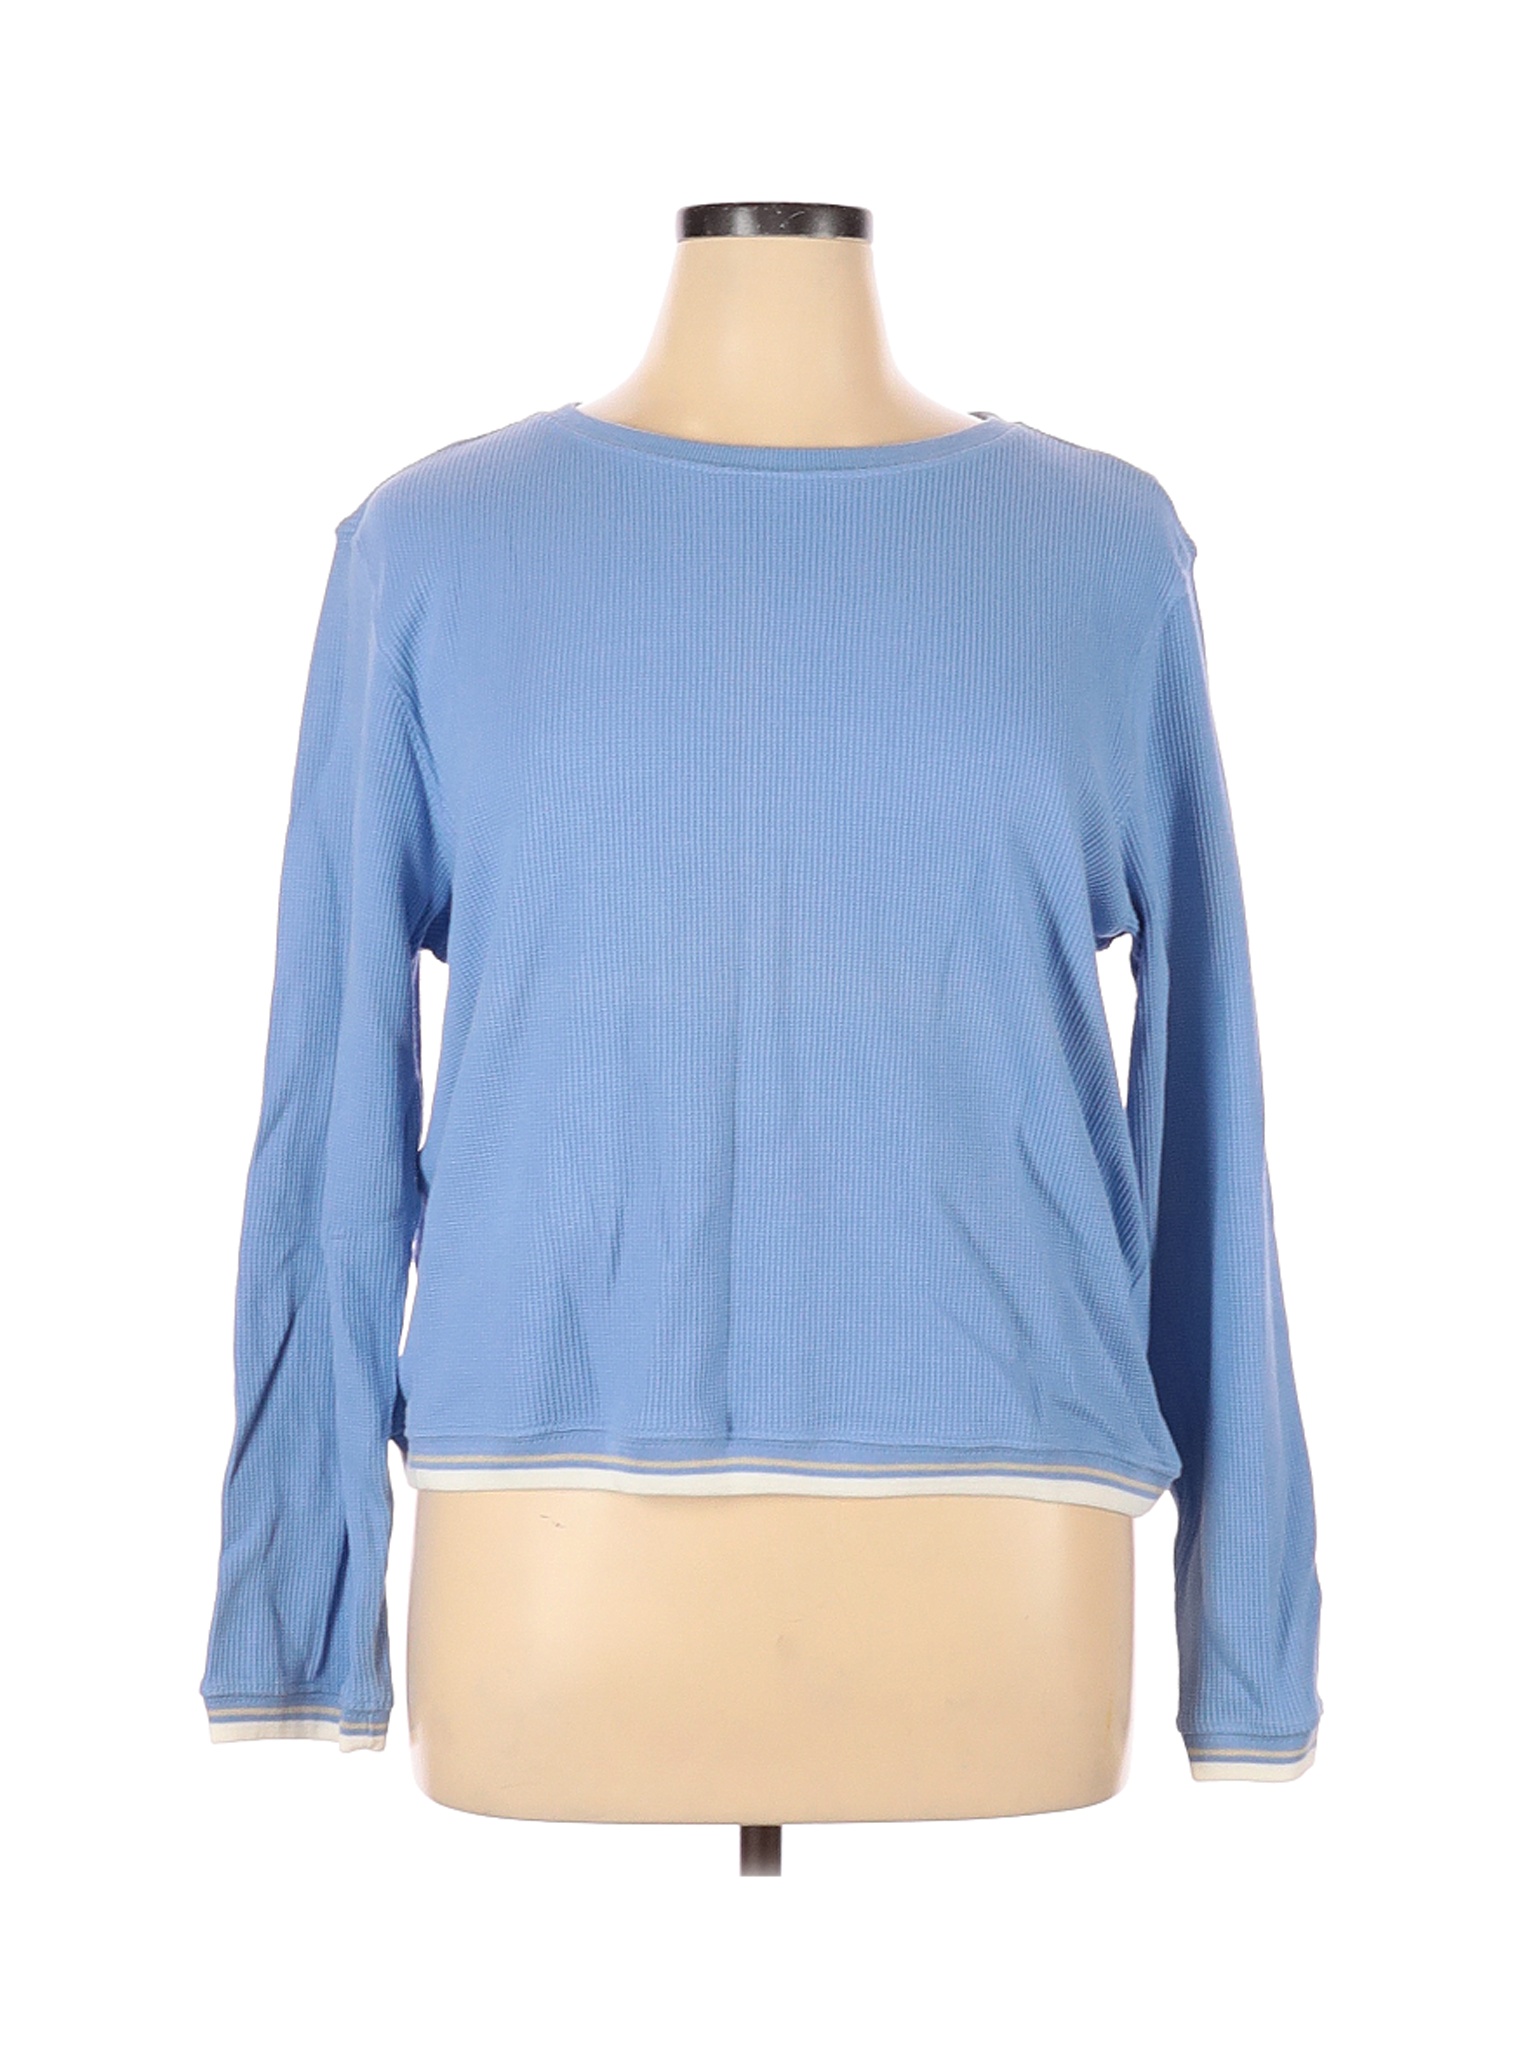 Liz Claiborne Women Blue Thermal Top XL | eBay